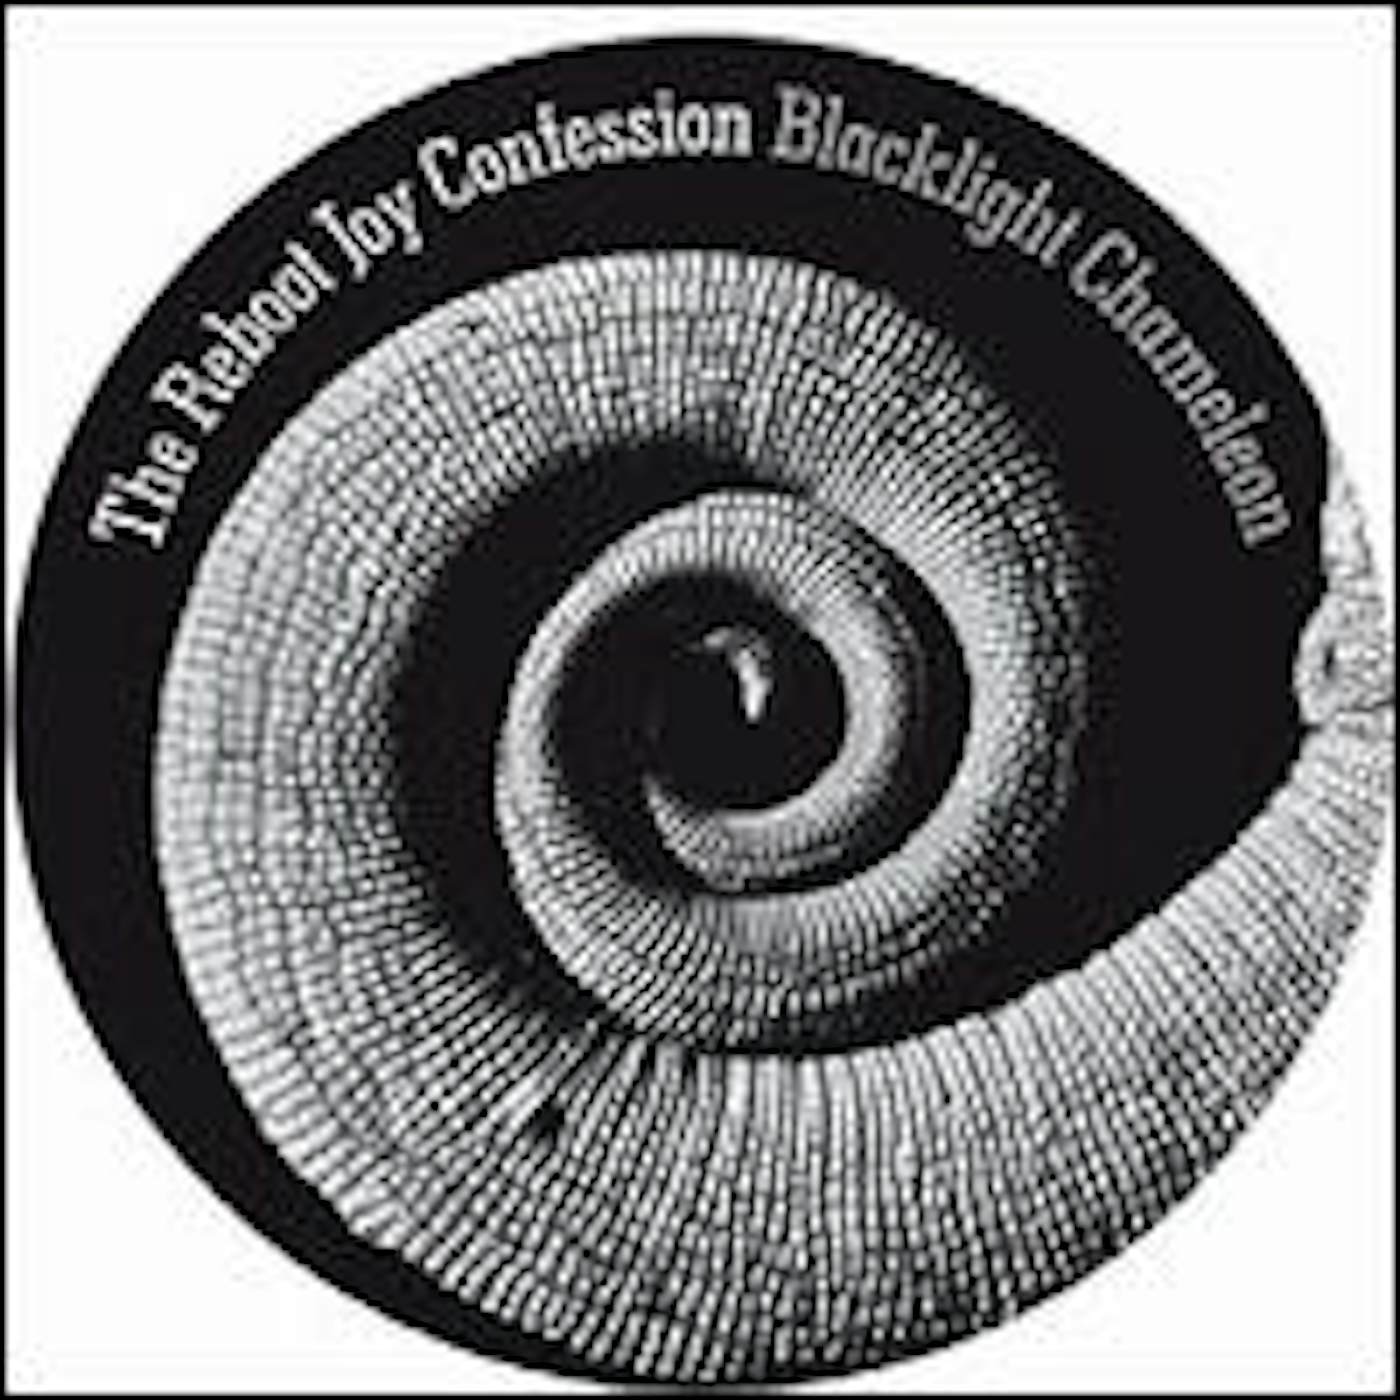 The Reboot Joy Confession Blacklight Chameleon Vinyl Record